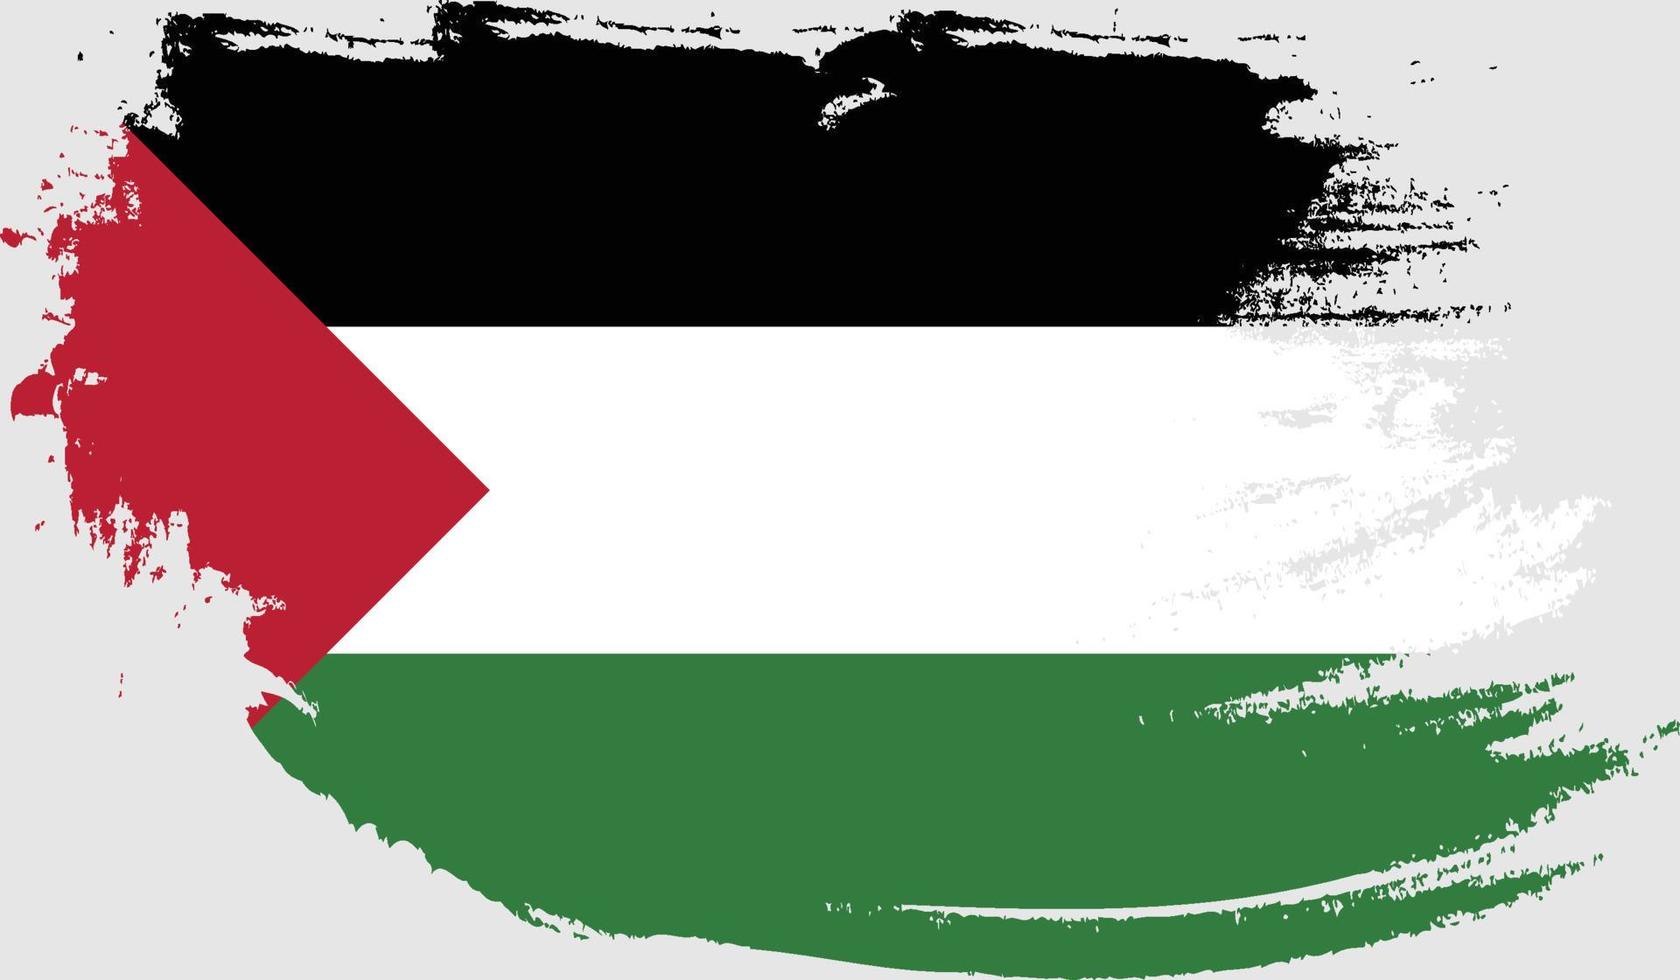 Palestine flag with grunge texture vector